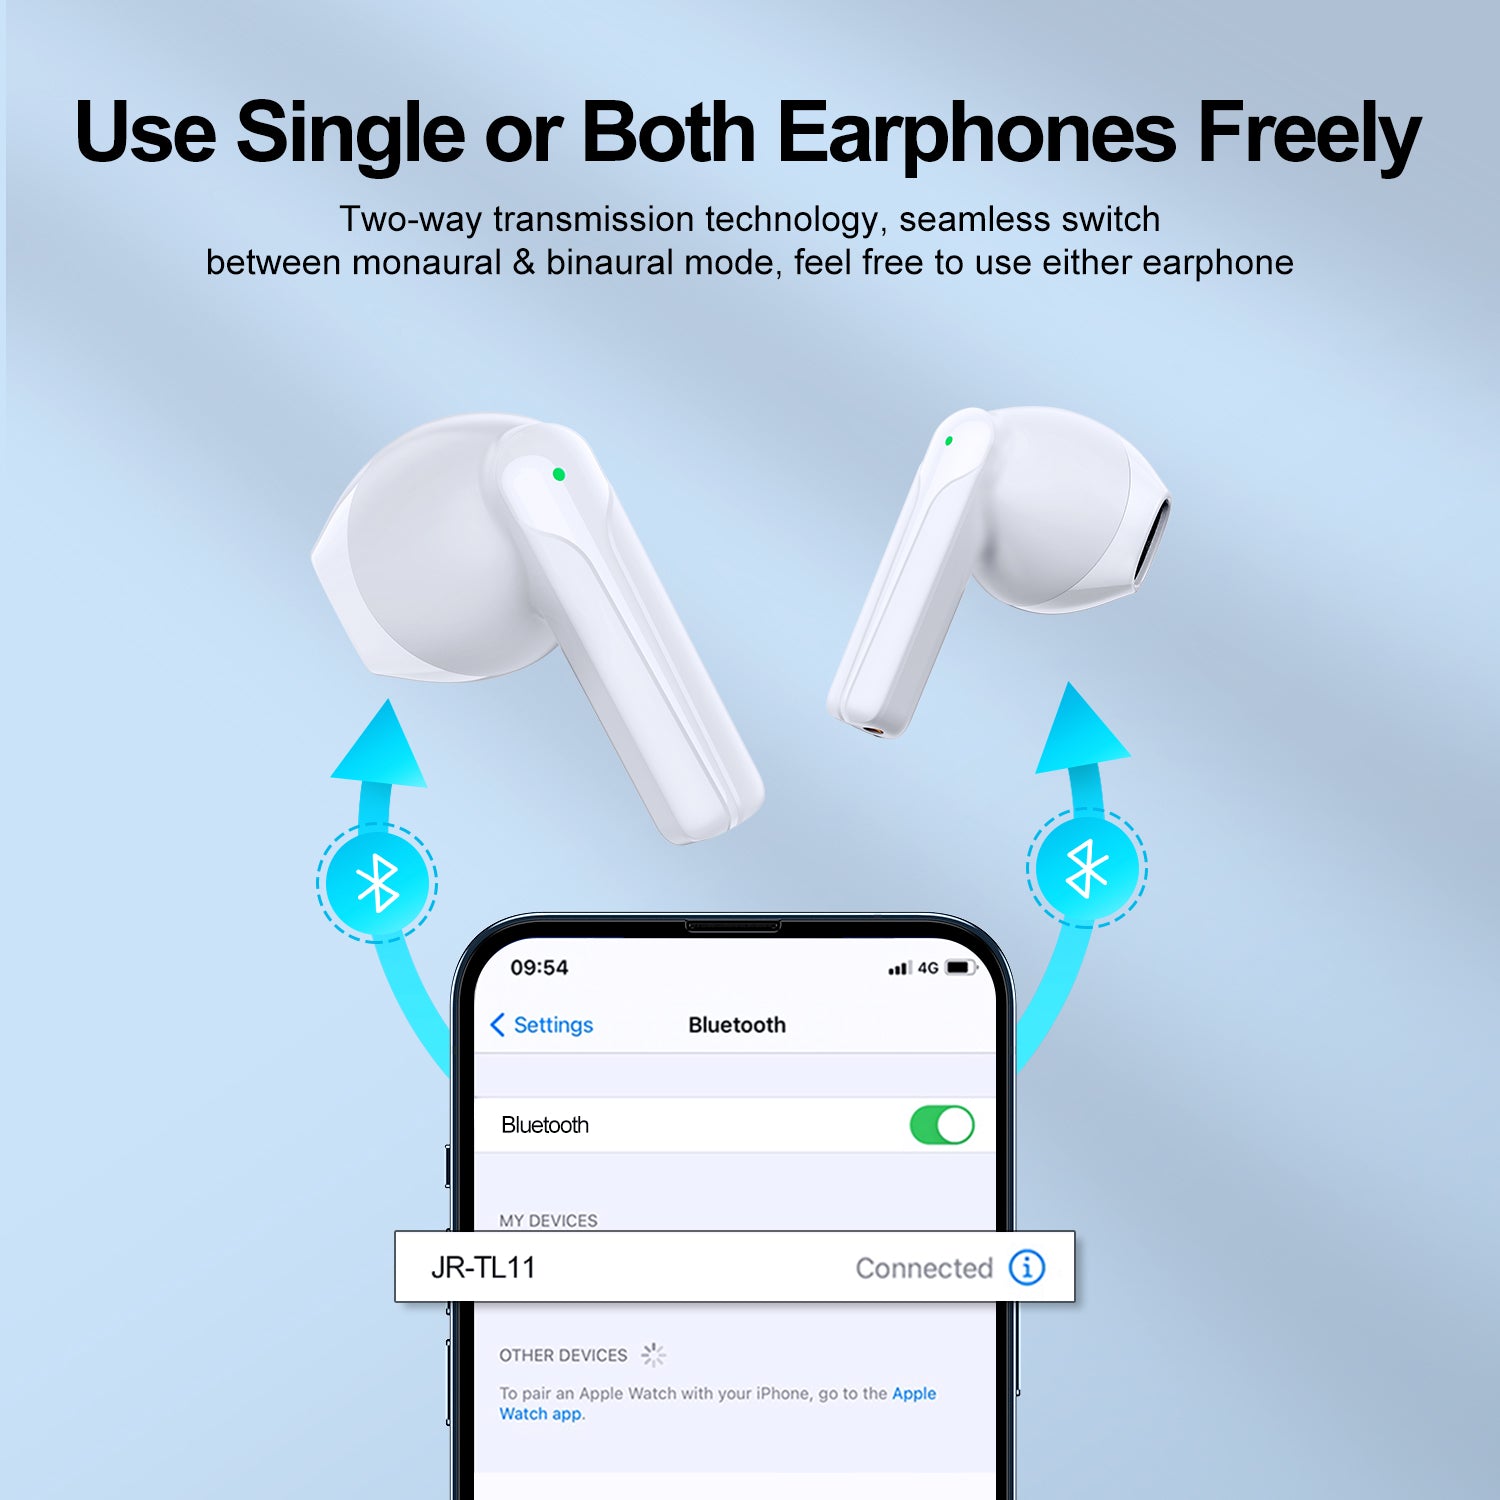 Use Single or Both Earphones Freely